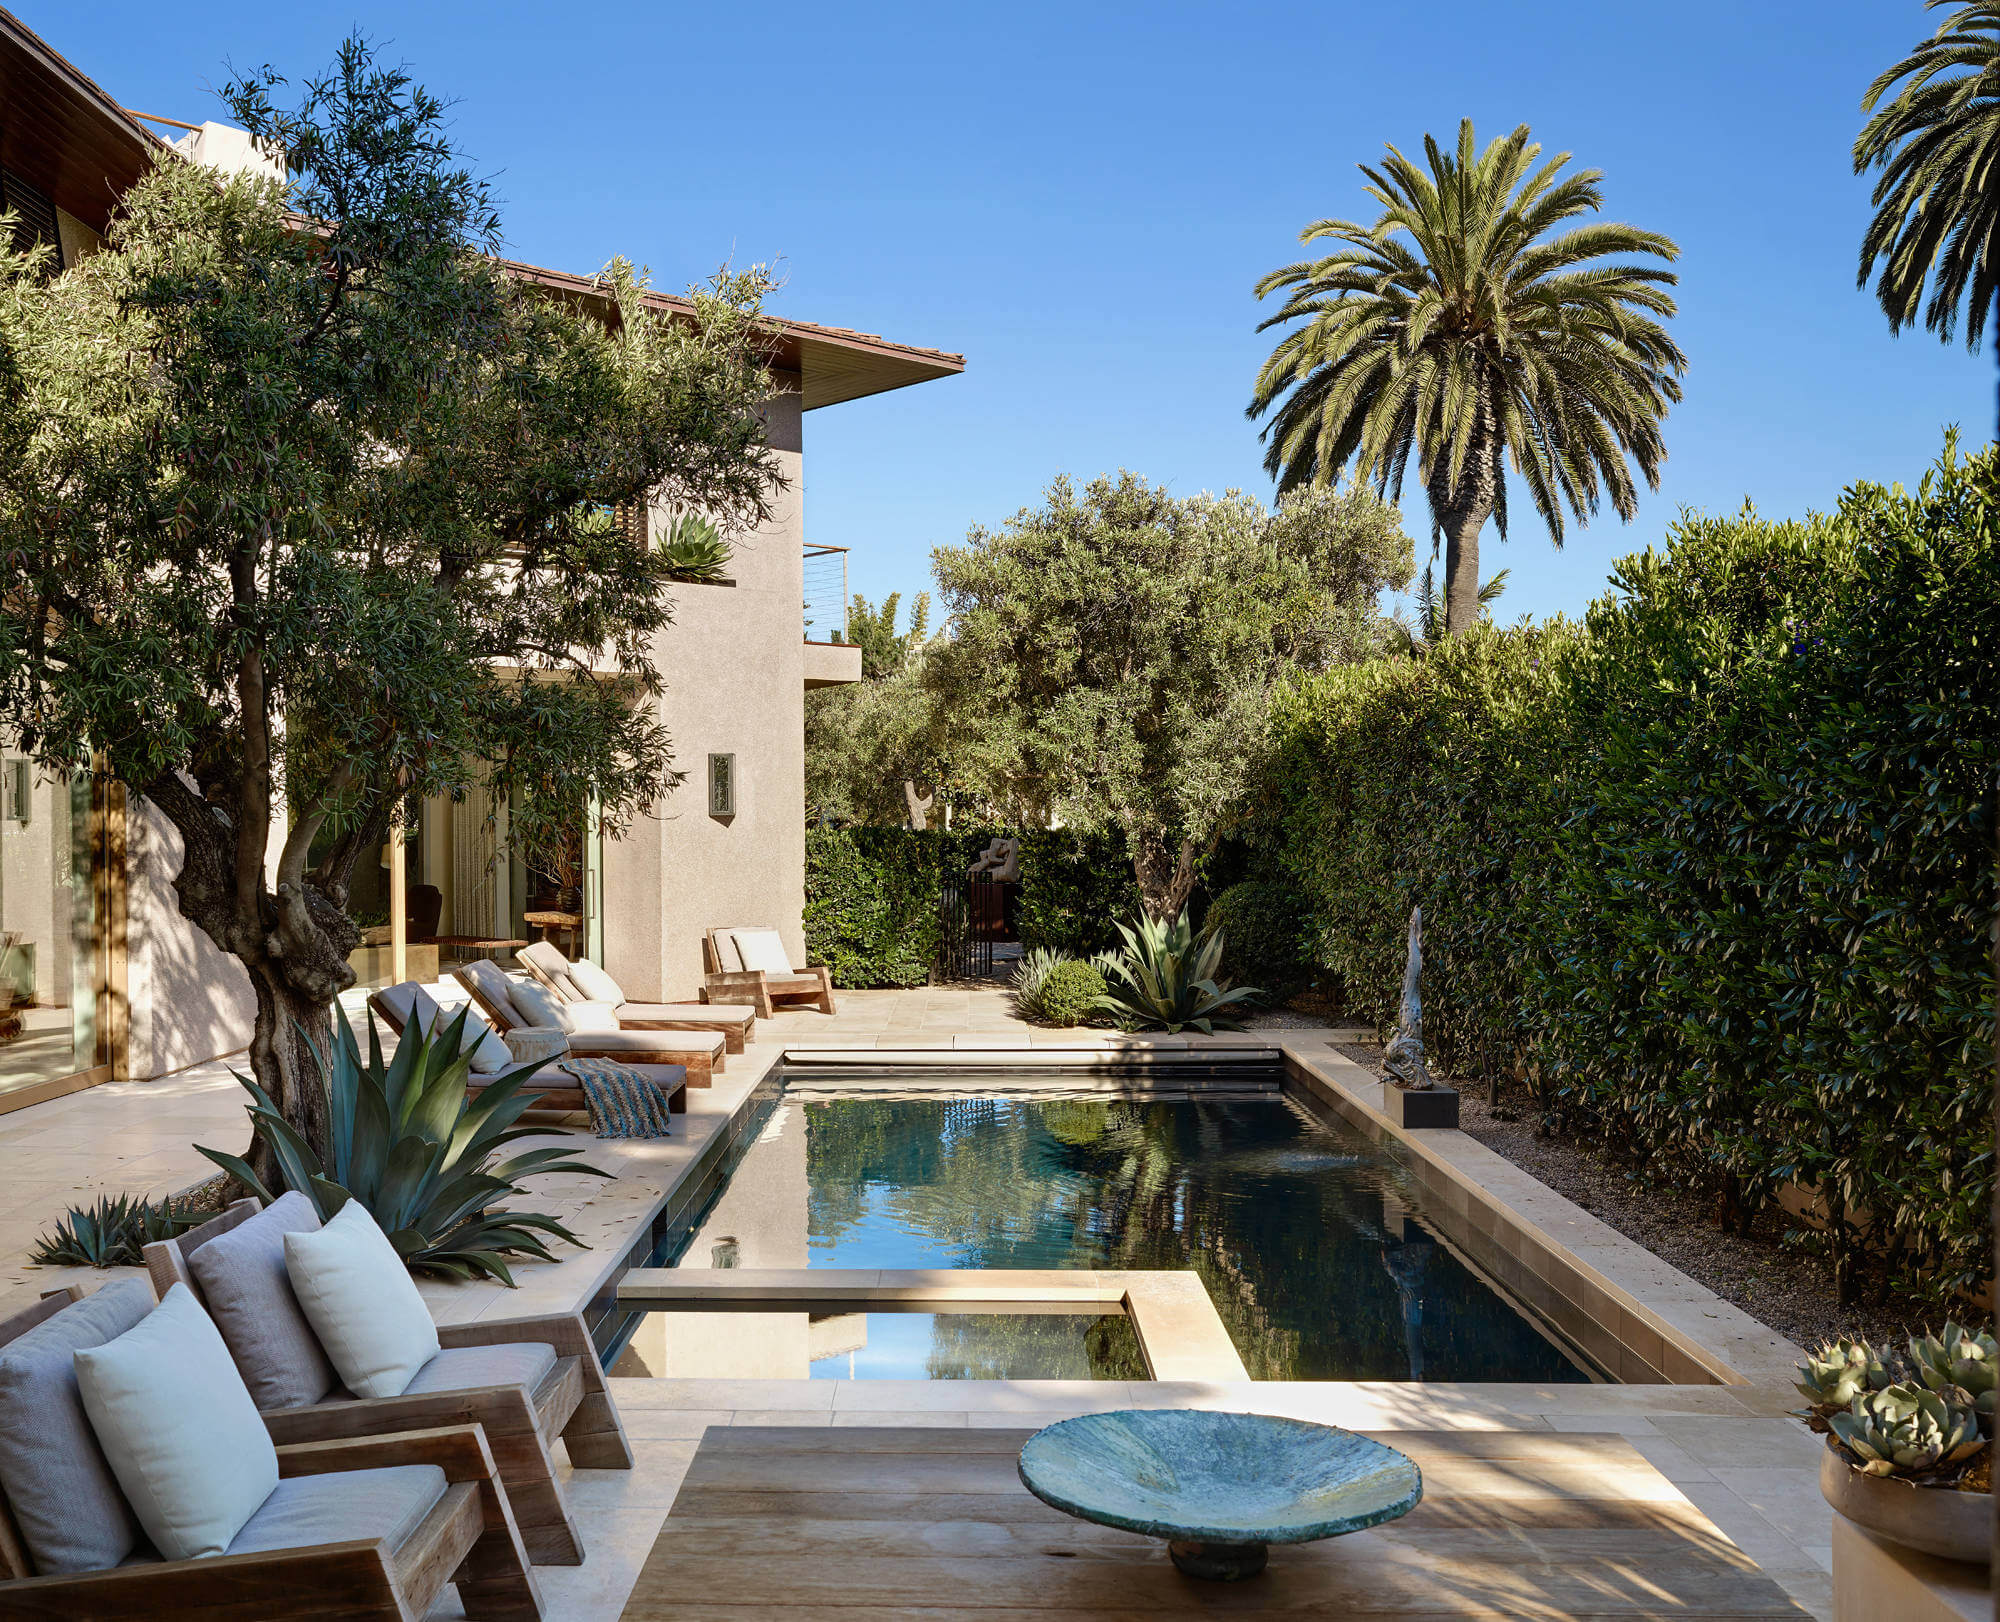 Mediterranean Coronado Residence near San Diego by Island Architects-11